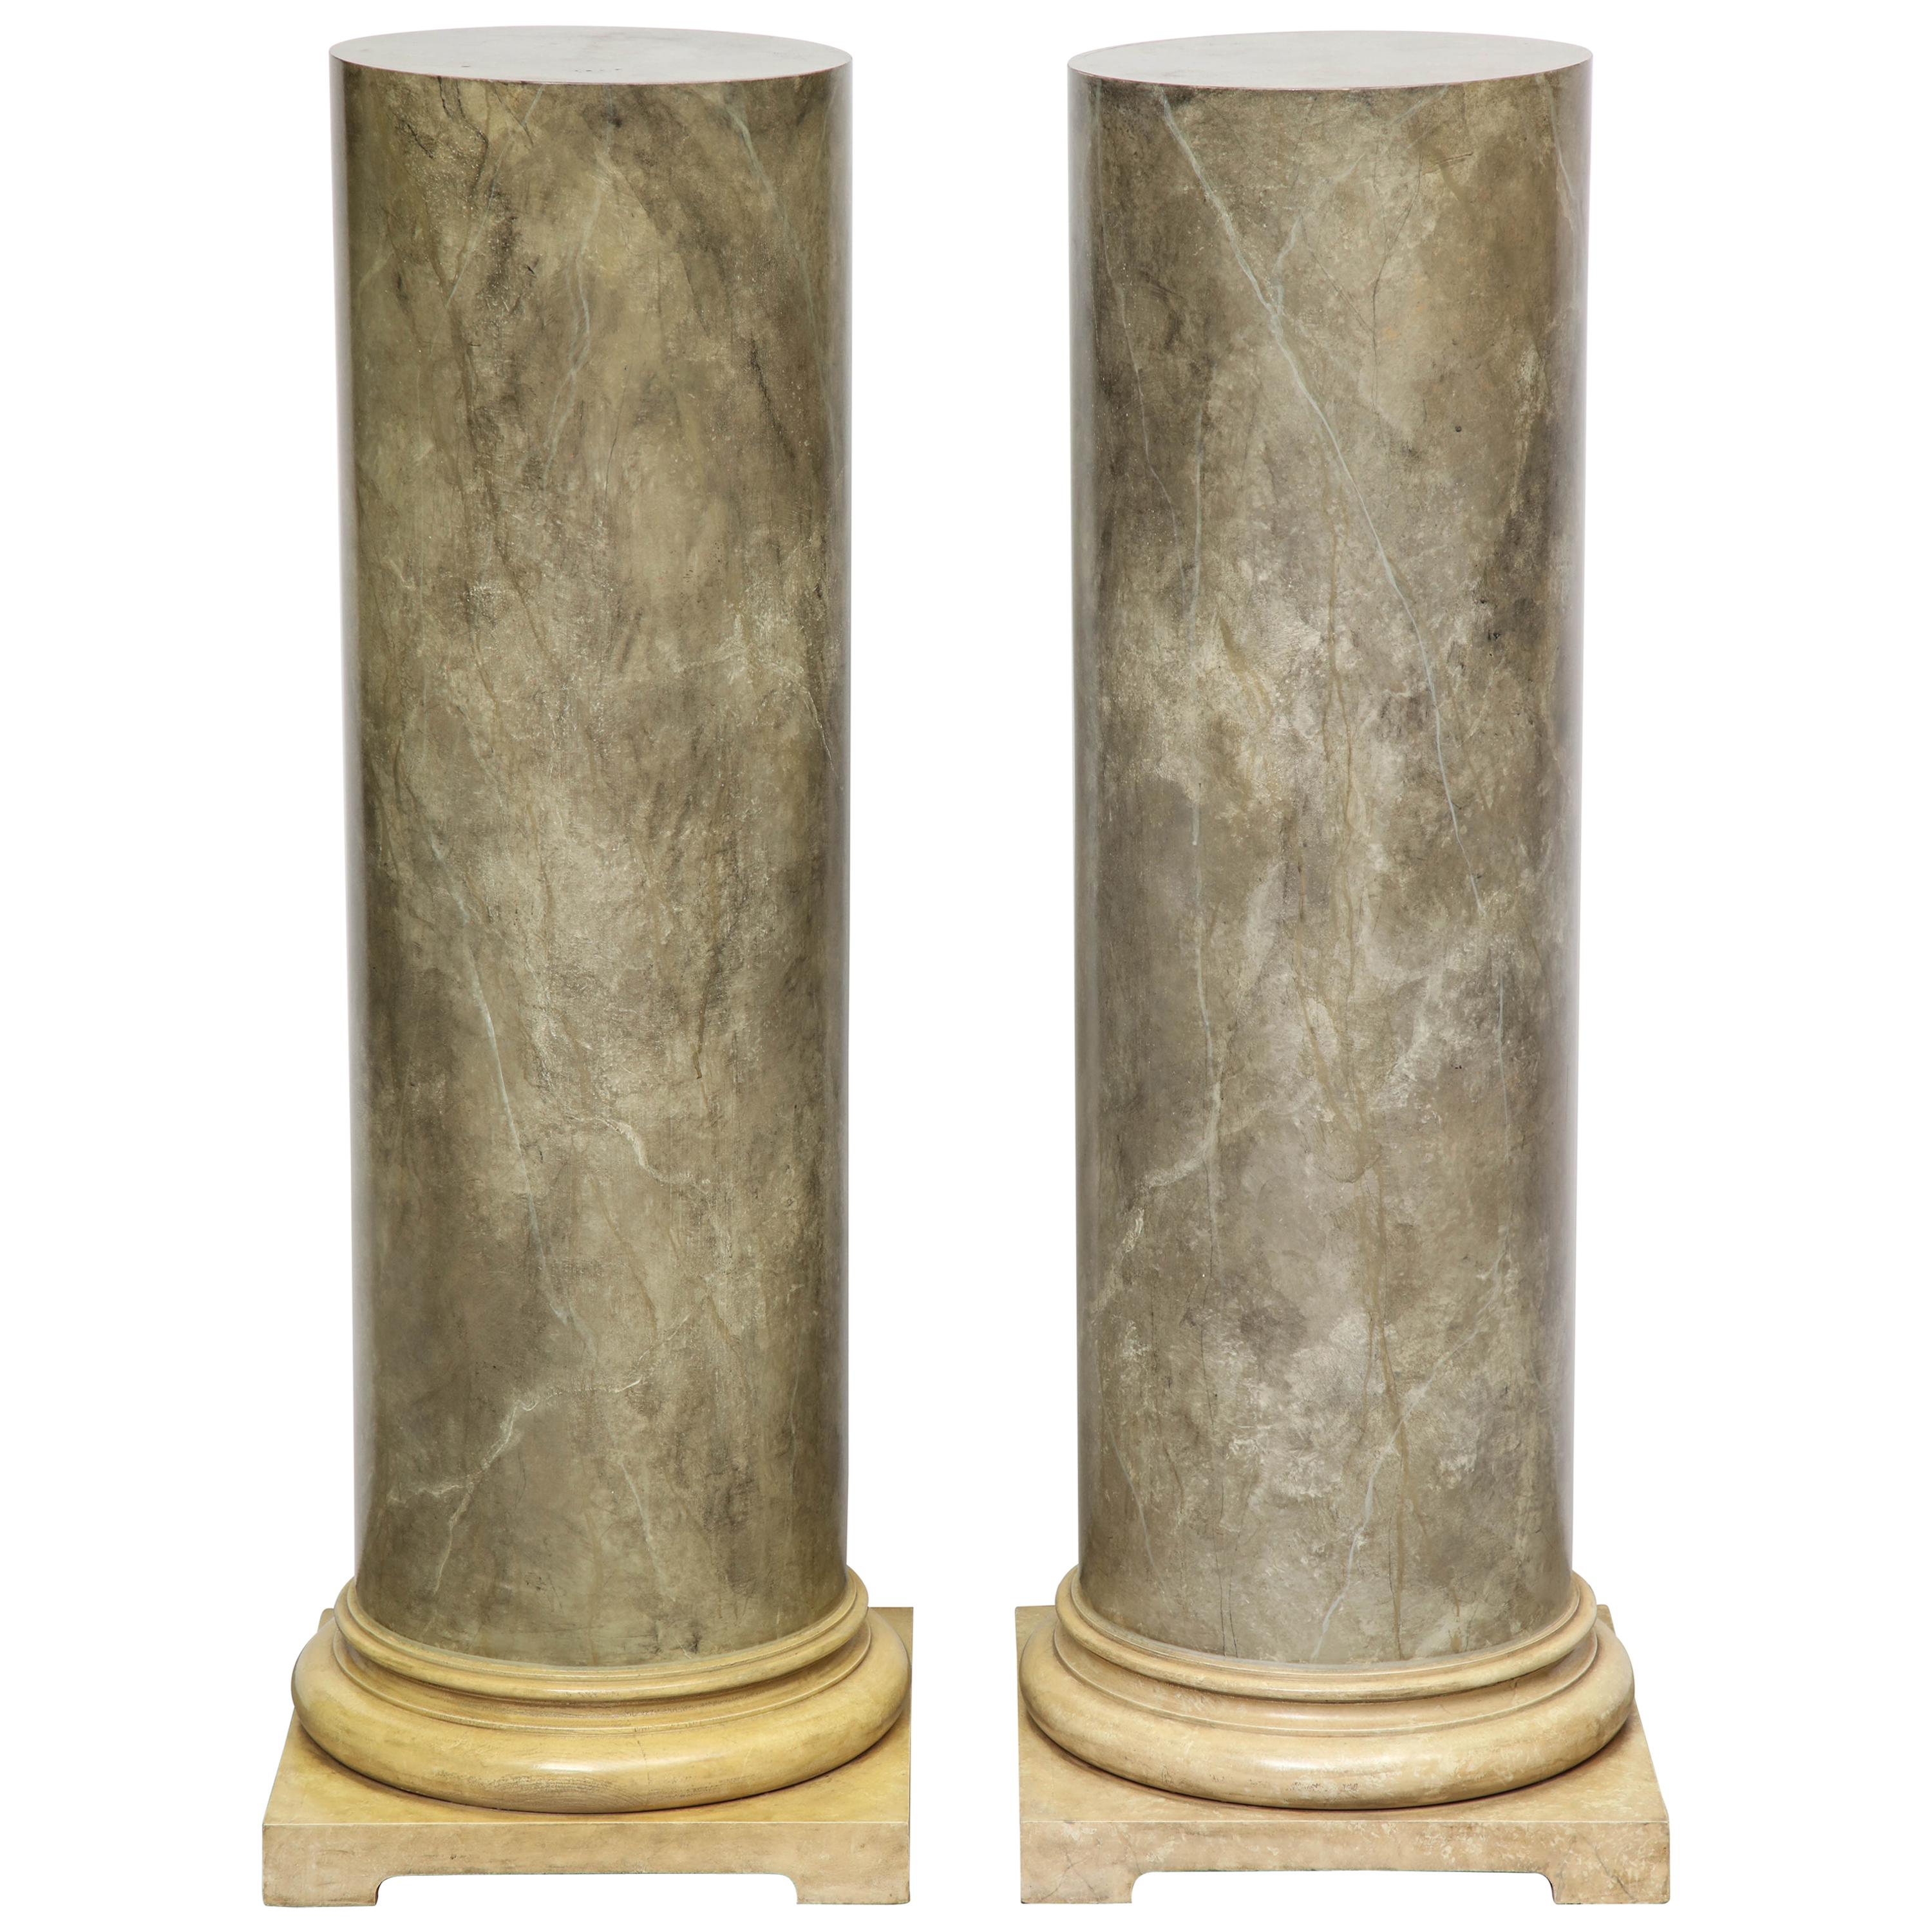 Pair of Faux Marbleized Pedestals